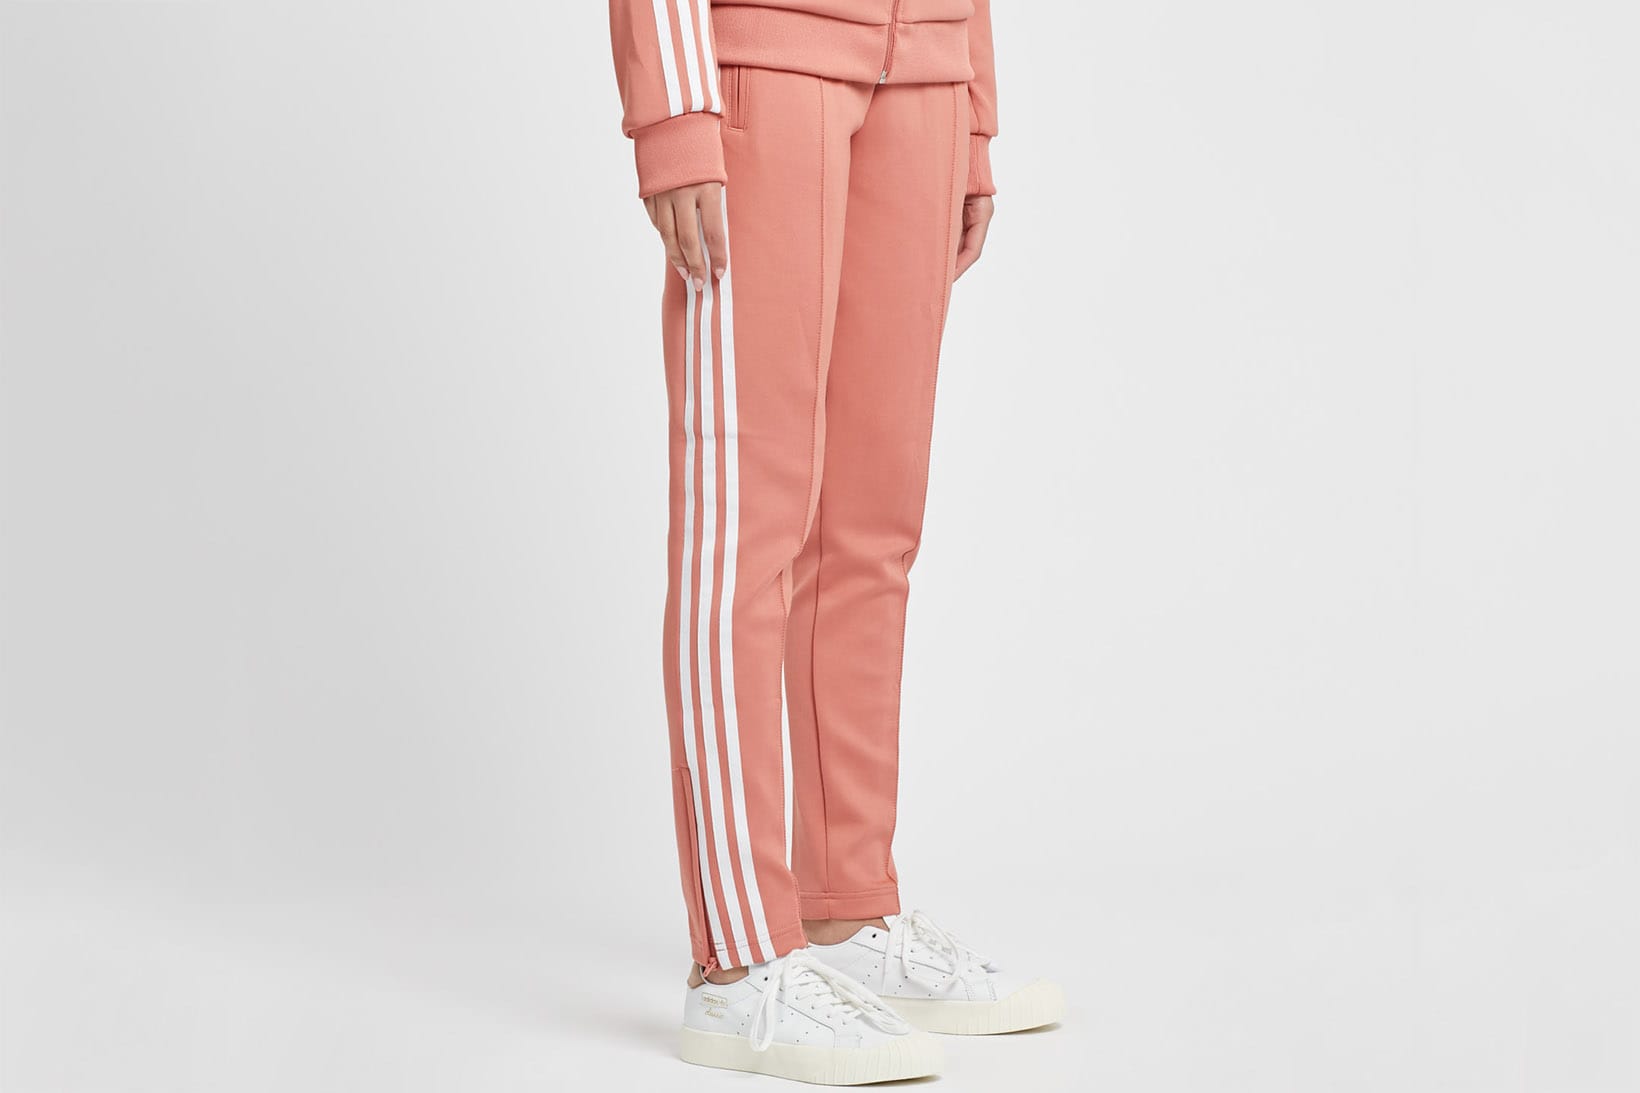 new adidas pants 2018